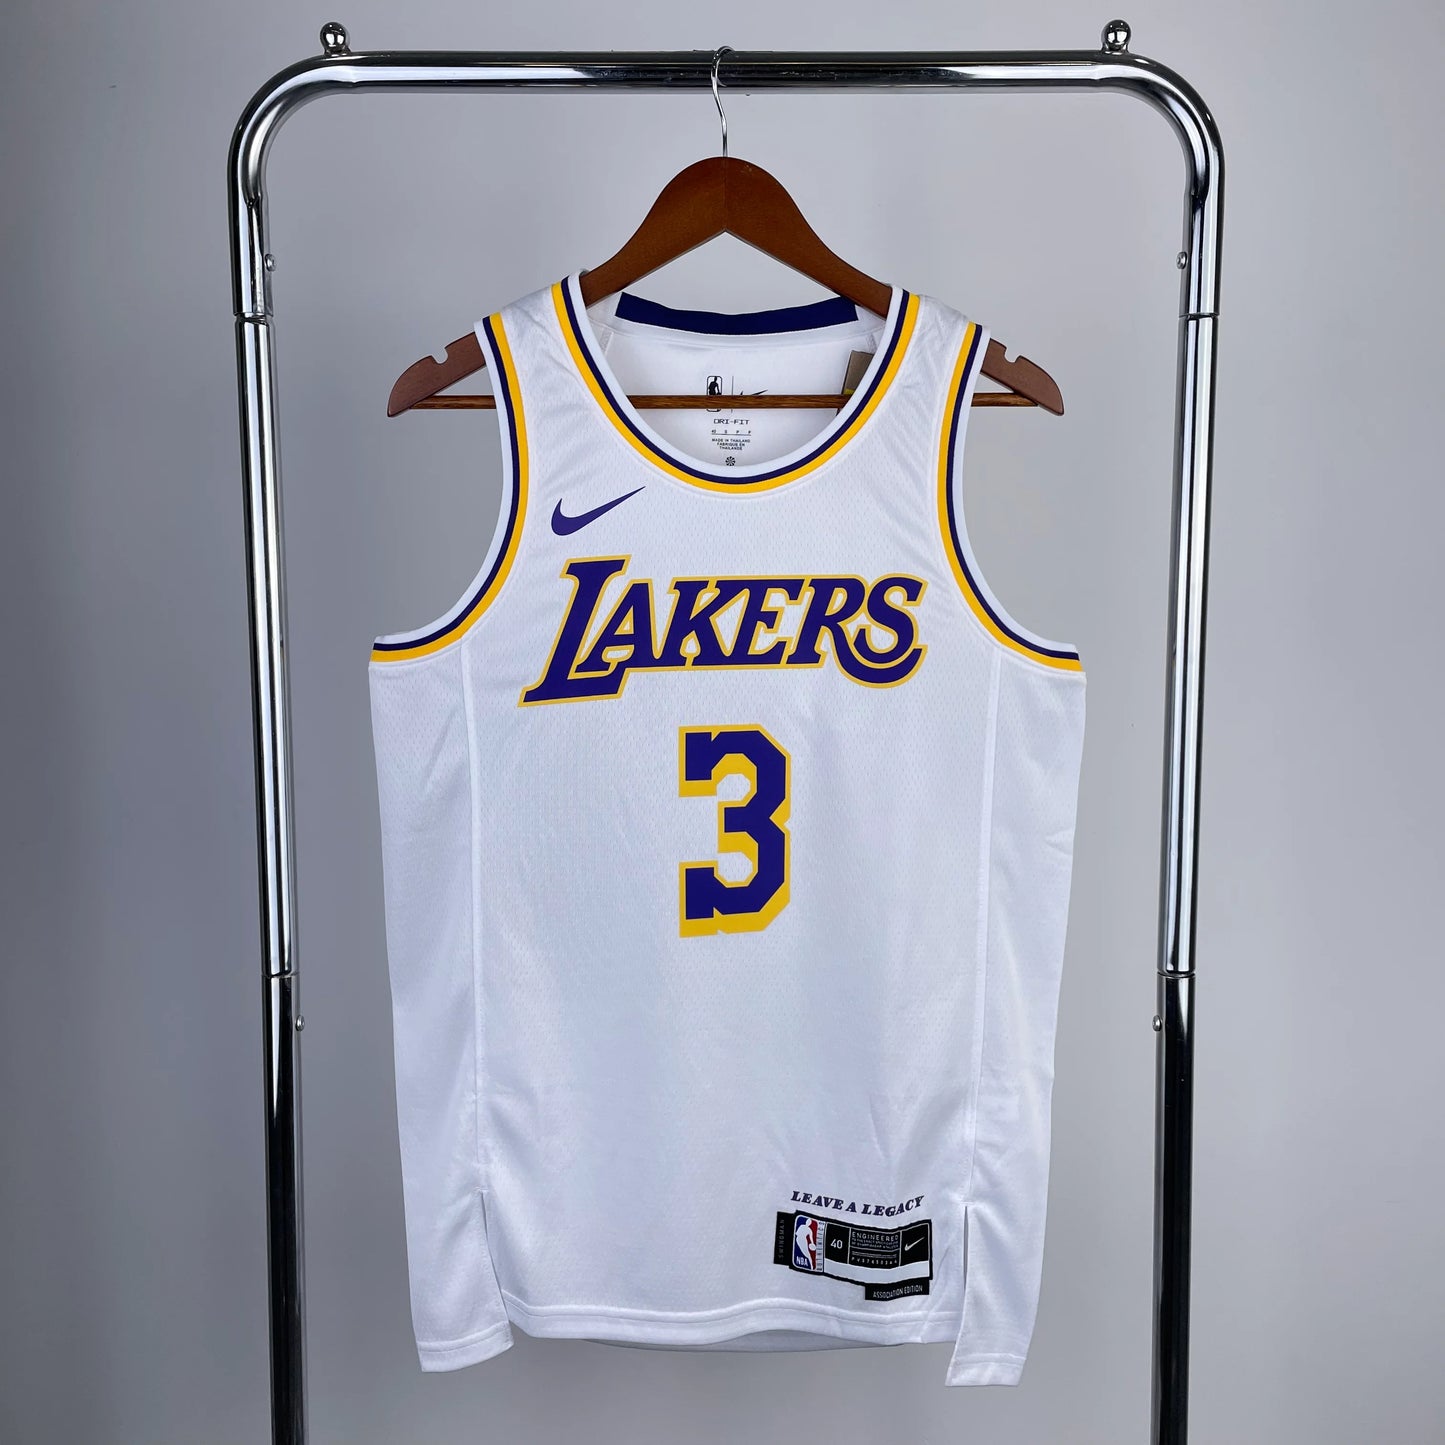 Los Angeles Lakers 23/24 Association Edition Jersey Nike Swingman